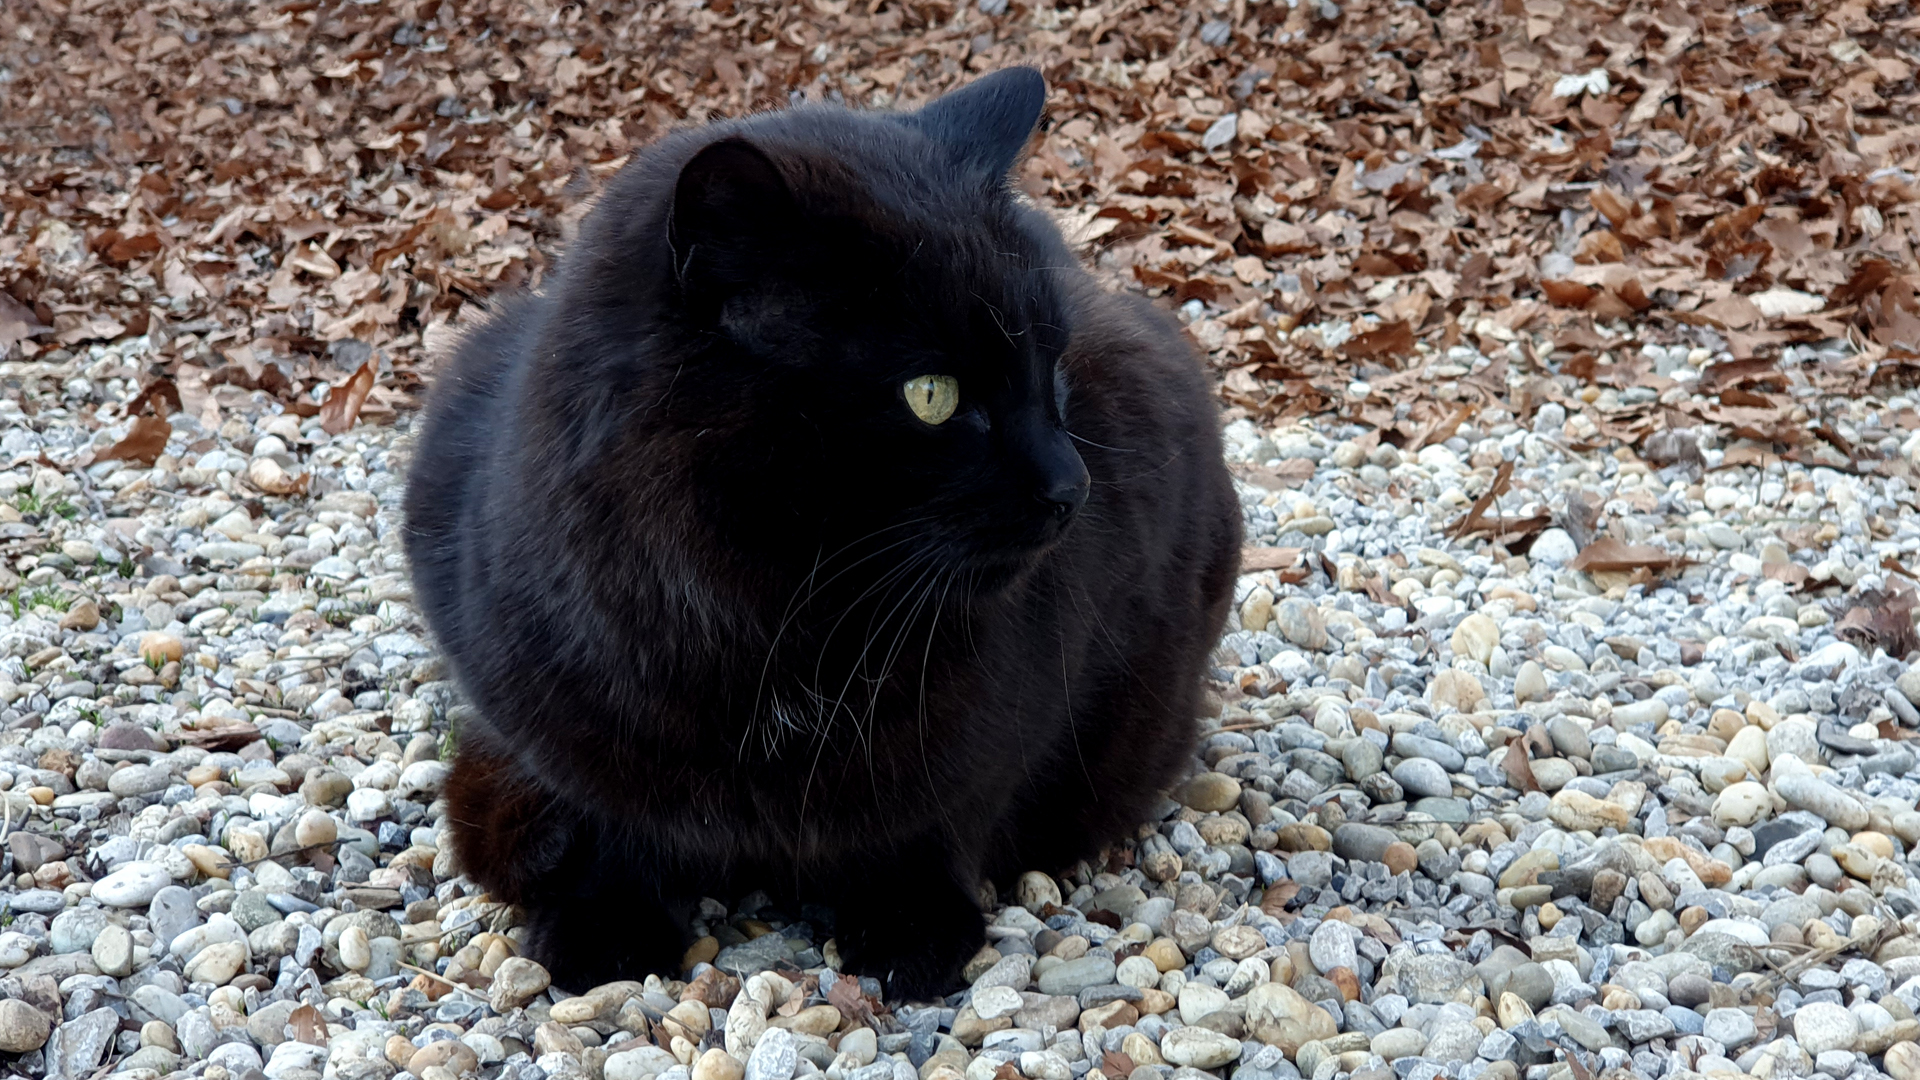 Fotostrecke Katzen 10: Schwarze Katze mit grünen Augen